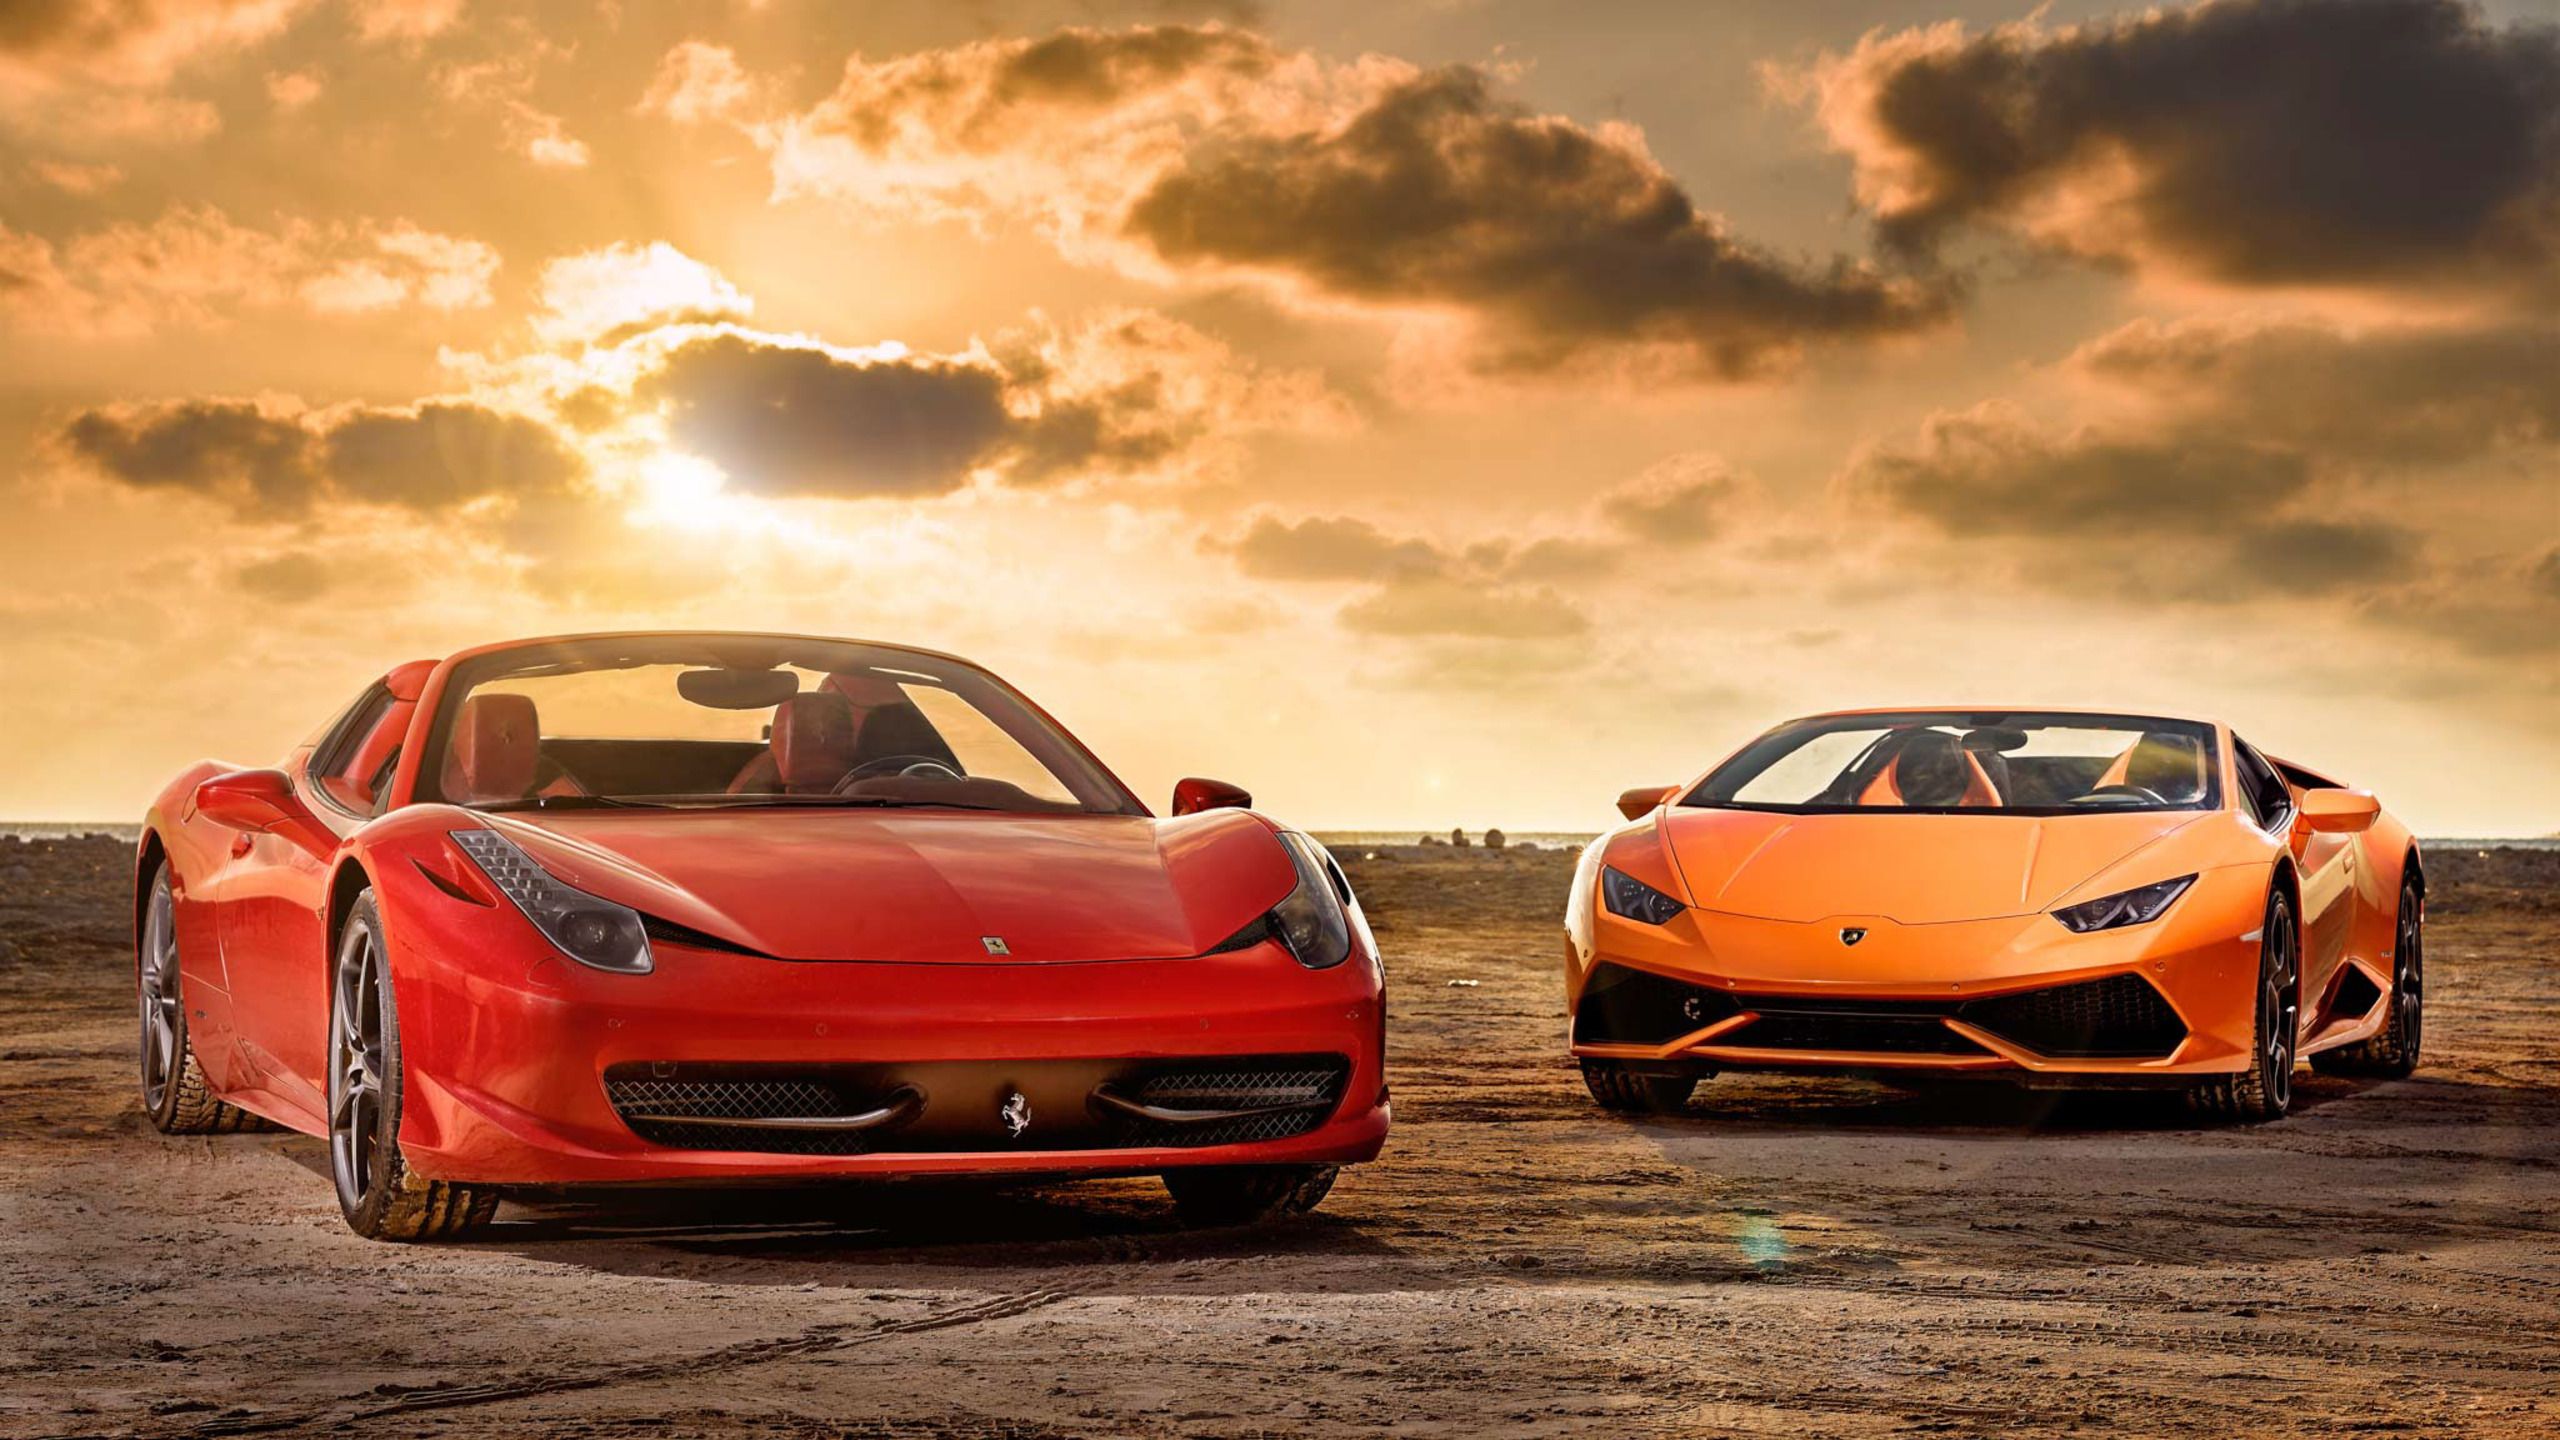 Is a Ferrari a more valuable car than a Lamborghini?